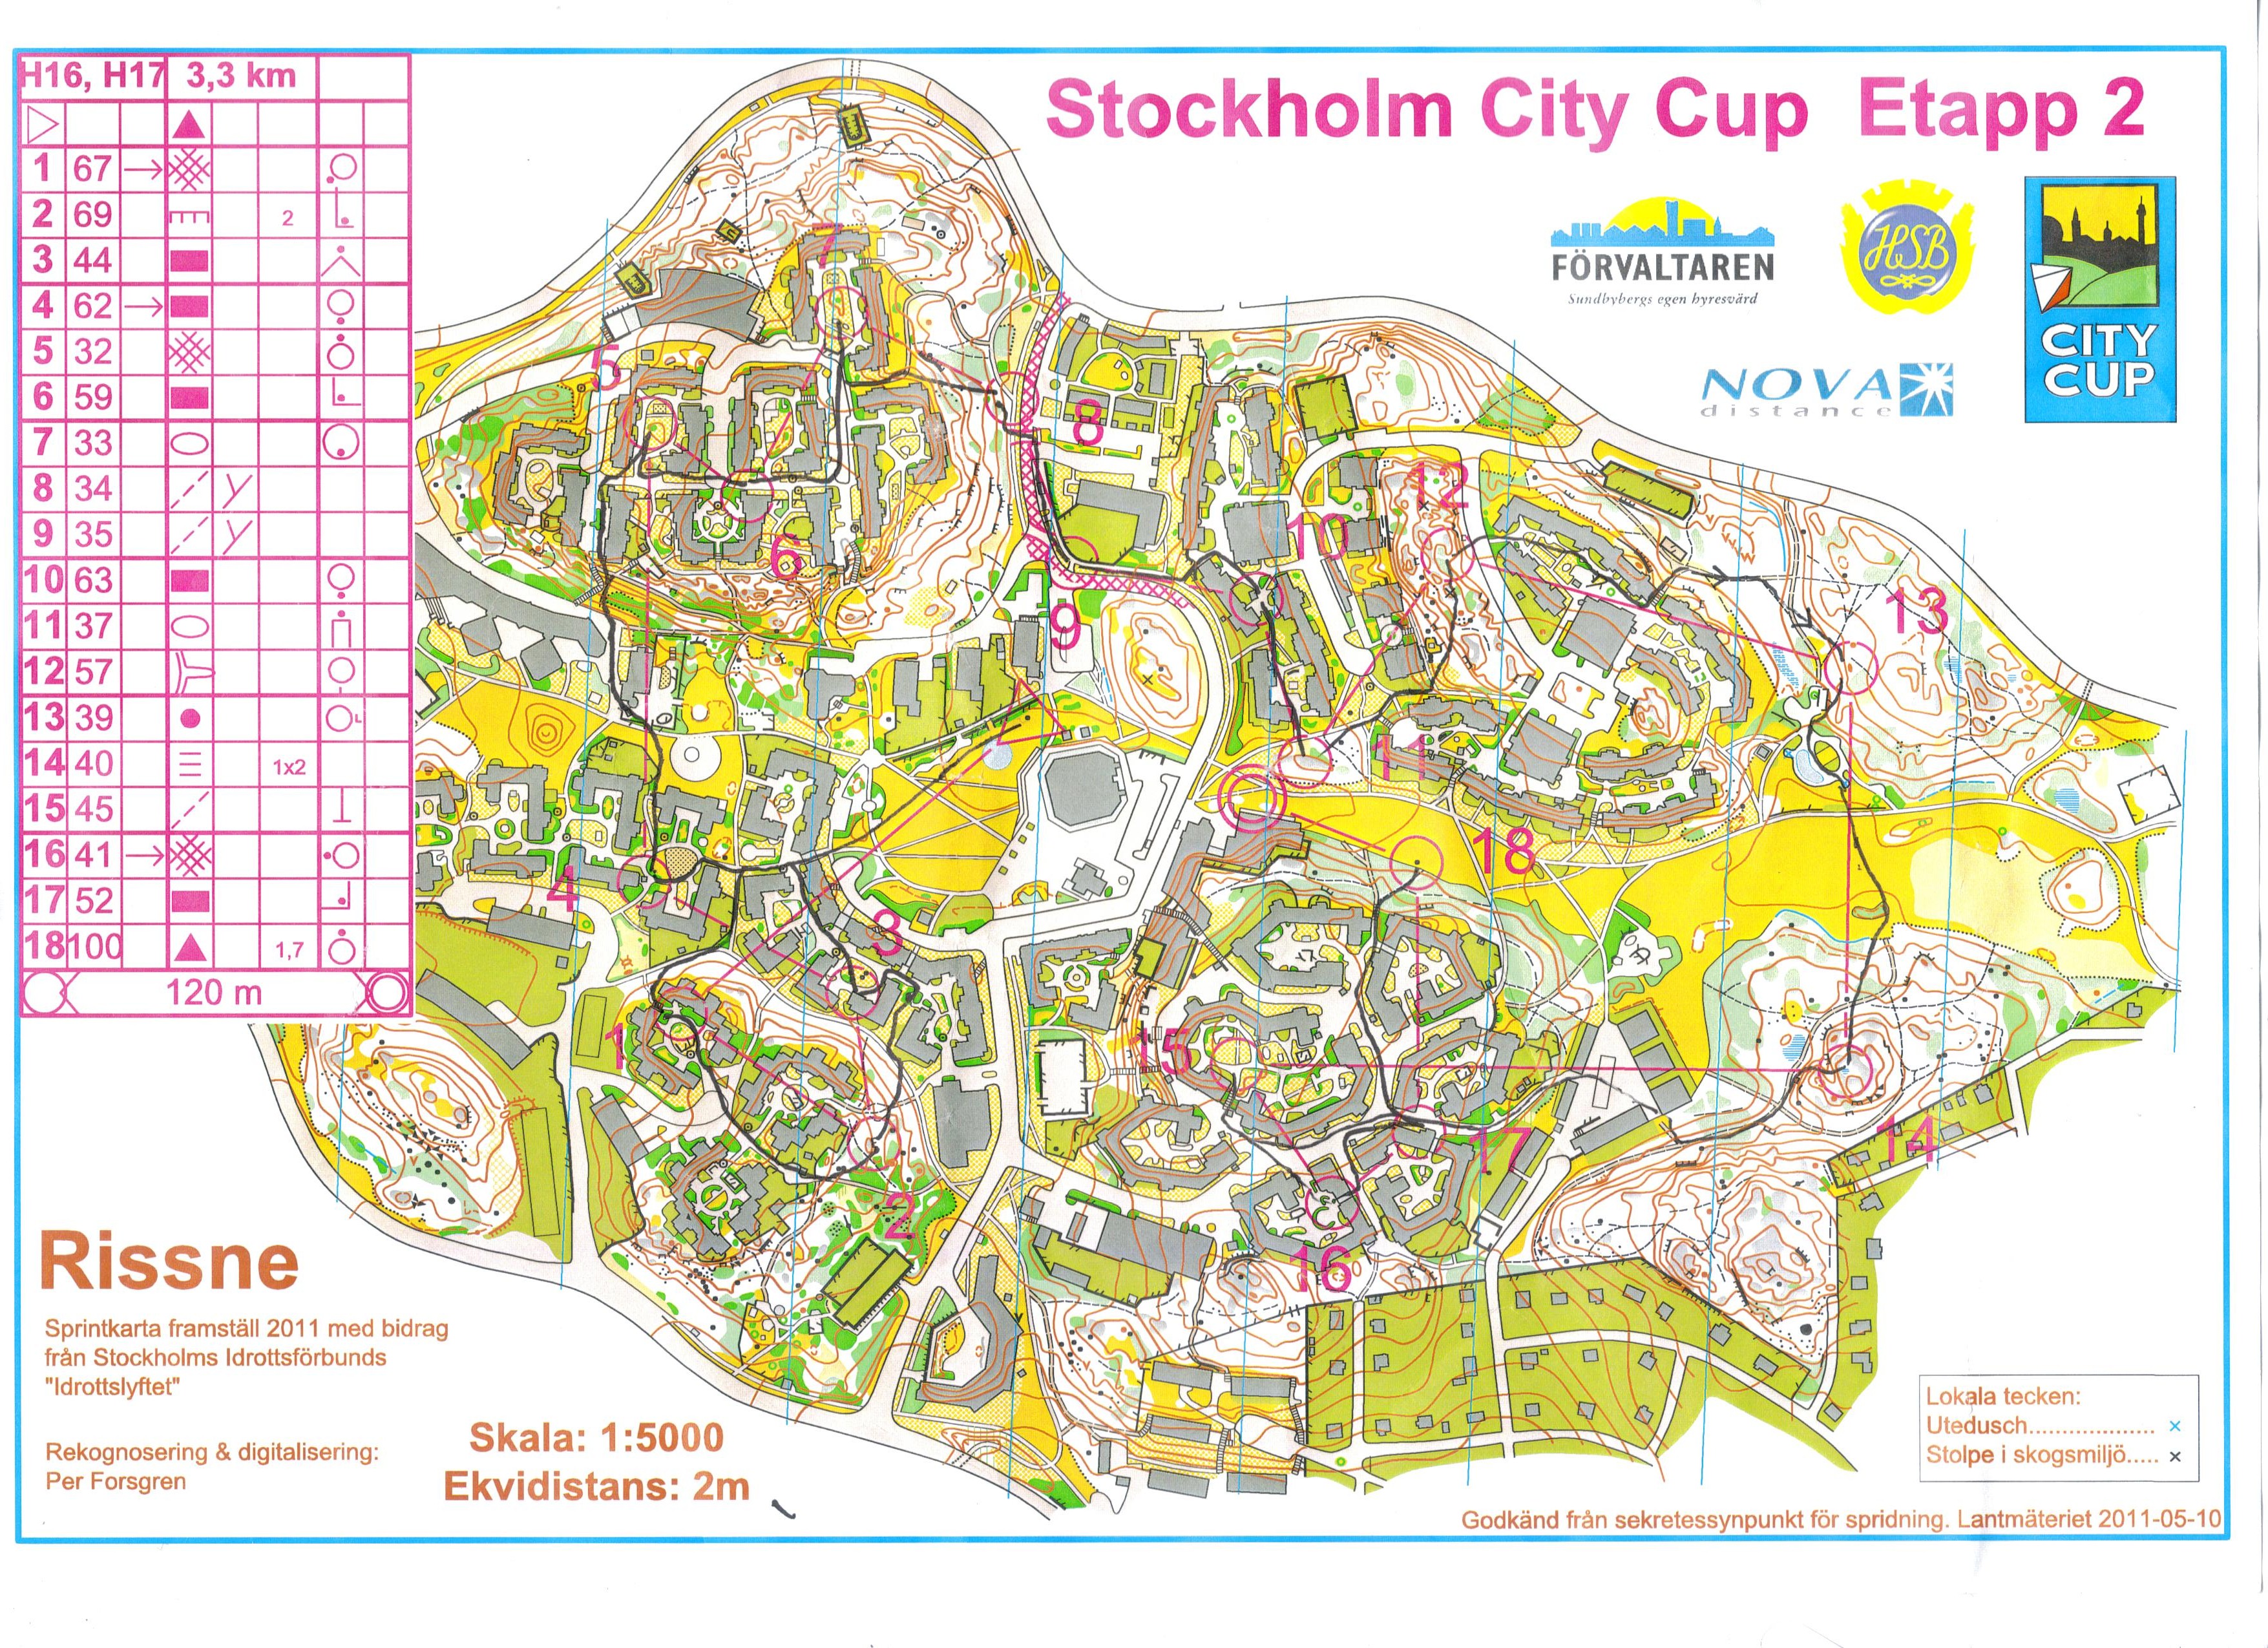 Stockholm City Cup Etapp 2 (2011-05-20)